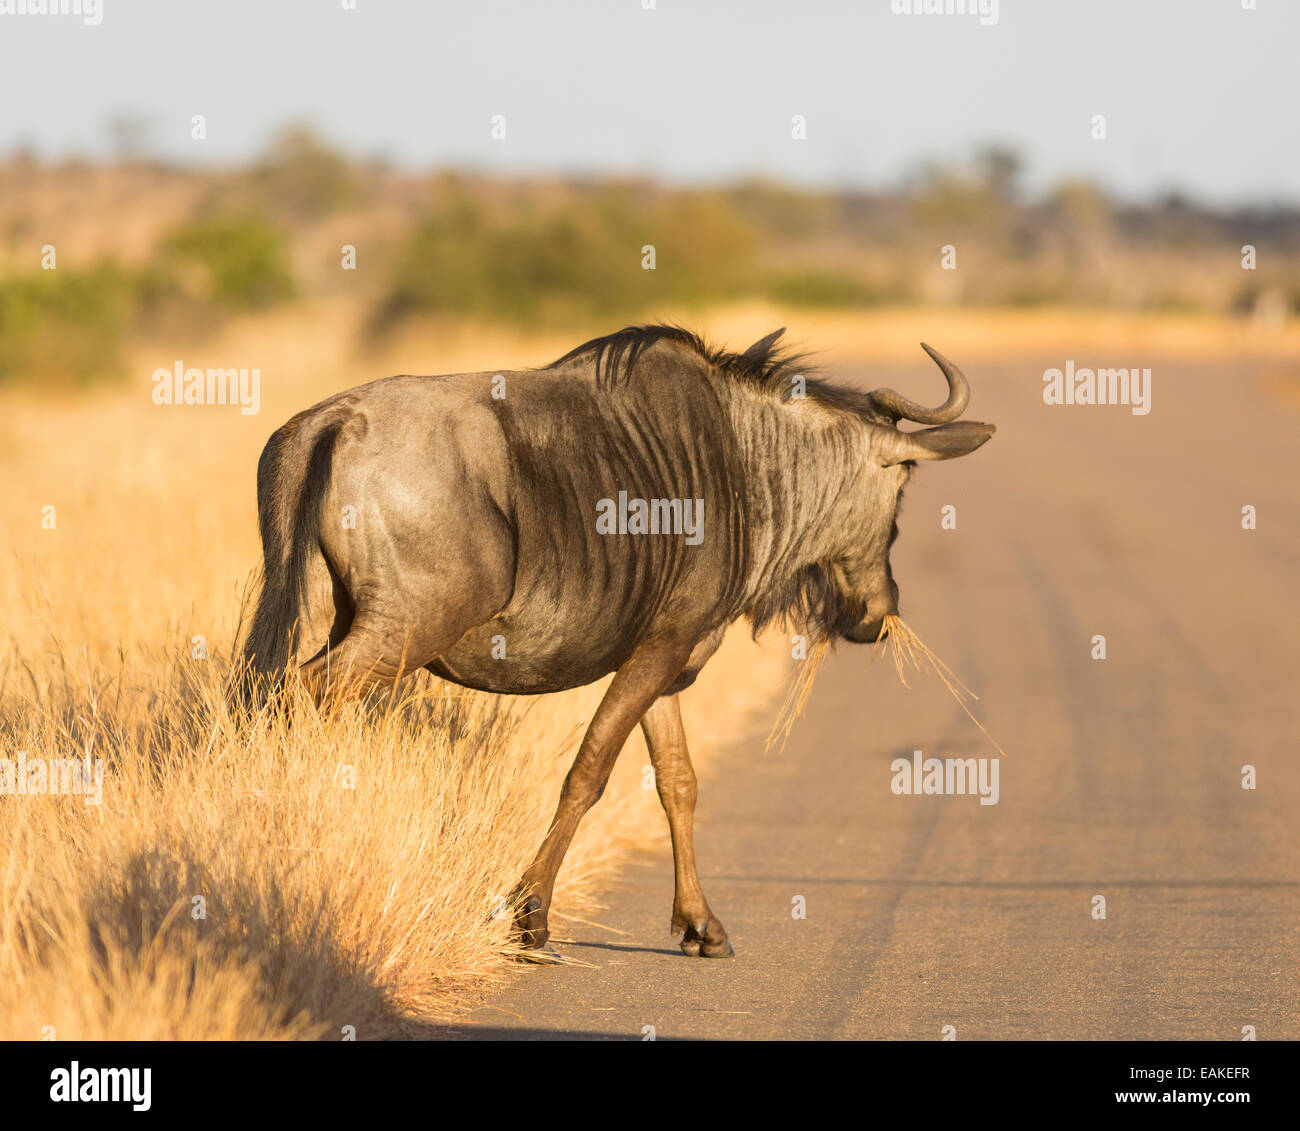 El Parque Nacional Kruger, Sudáfrica - el ñu azul crossing road Foto de stock